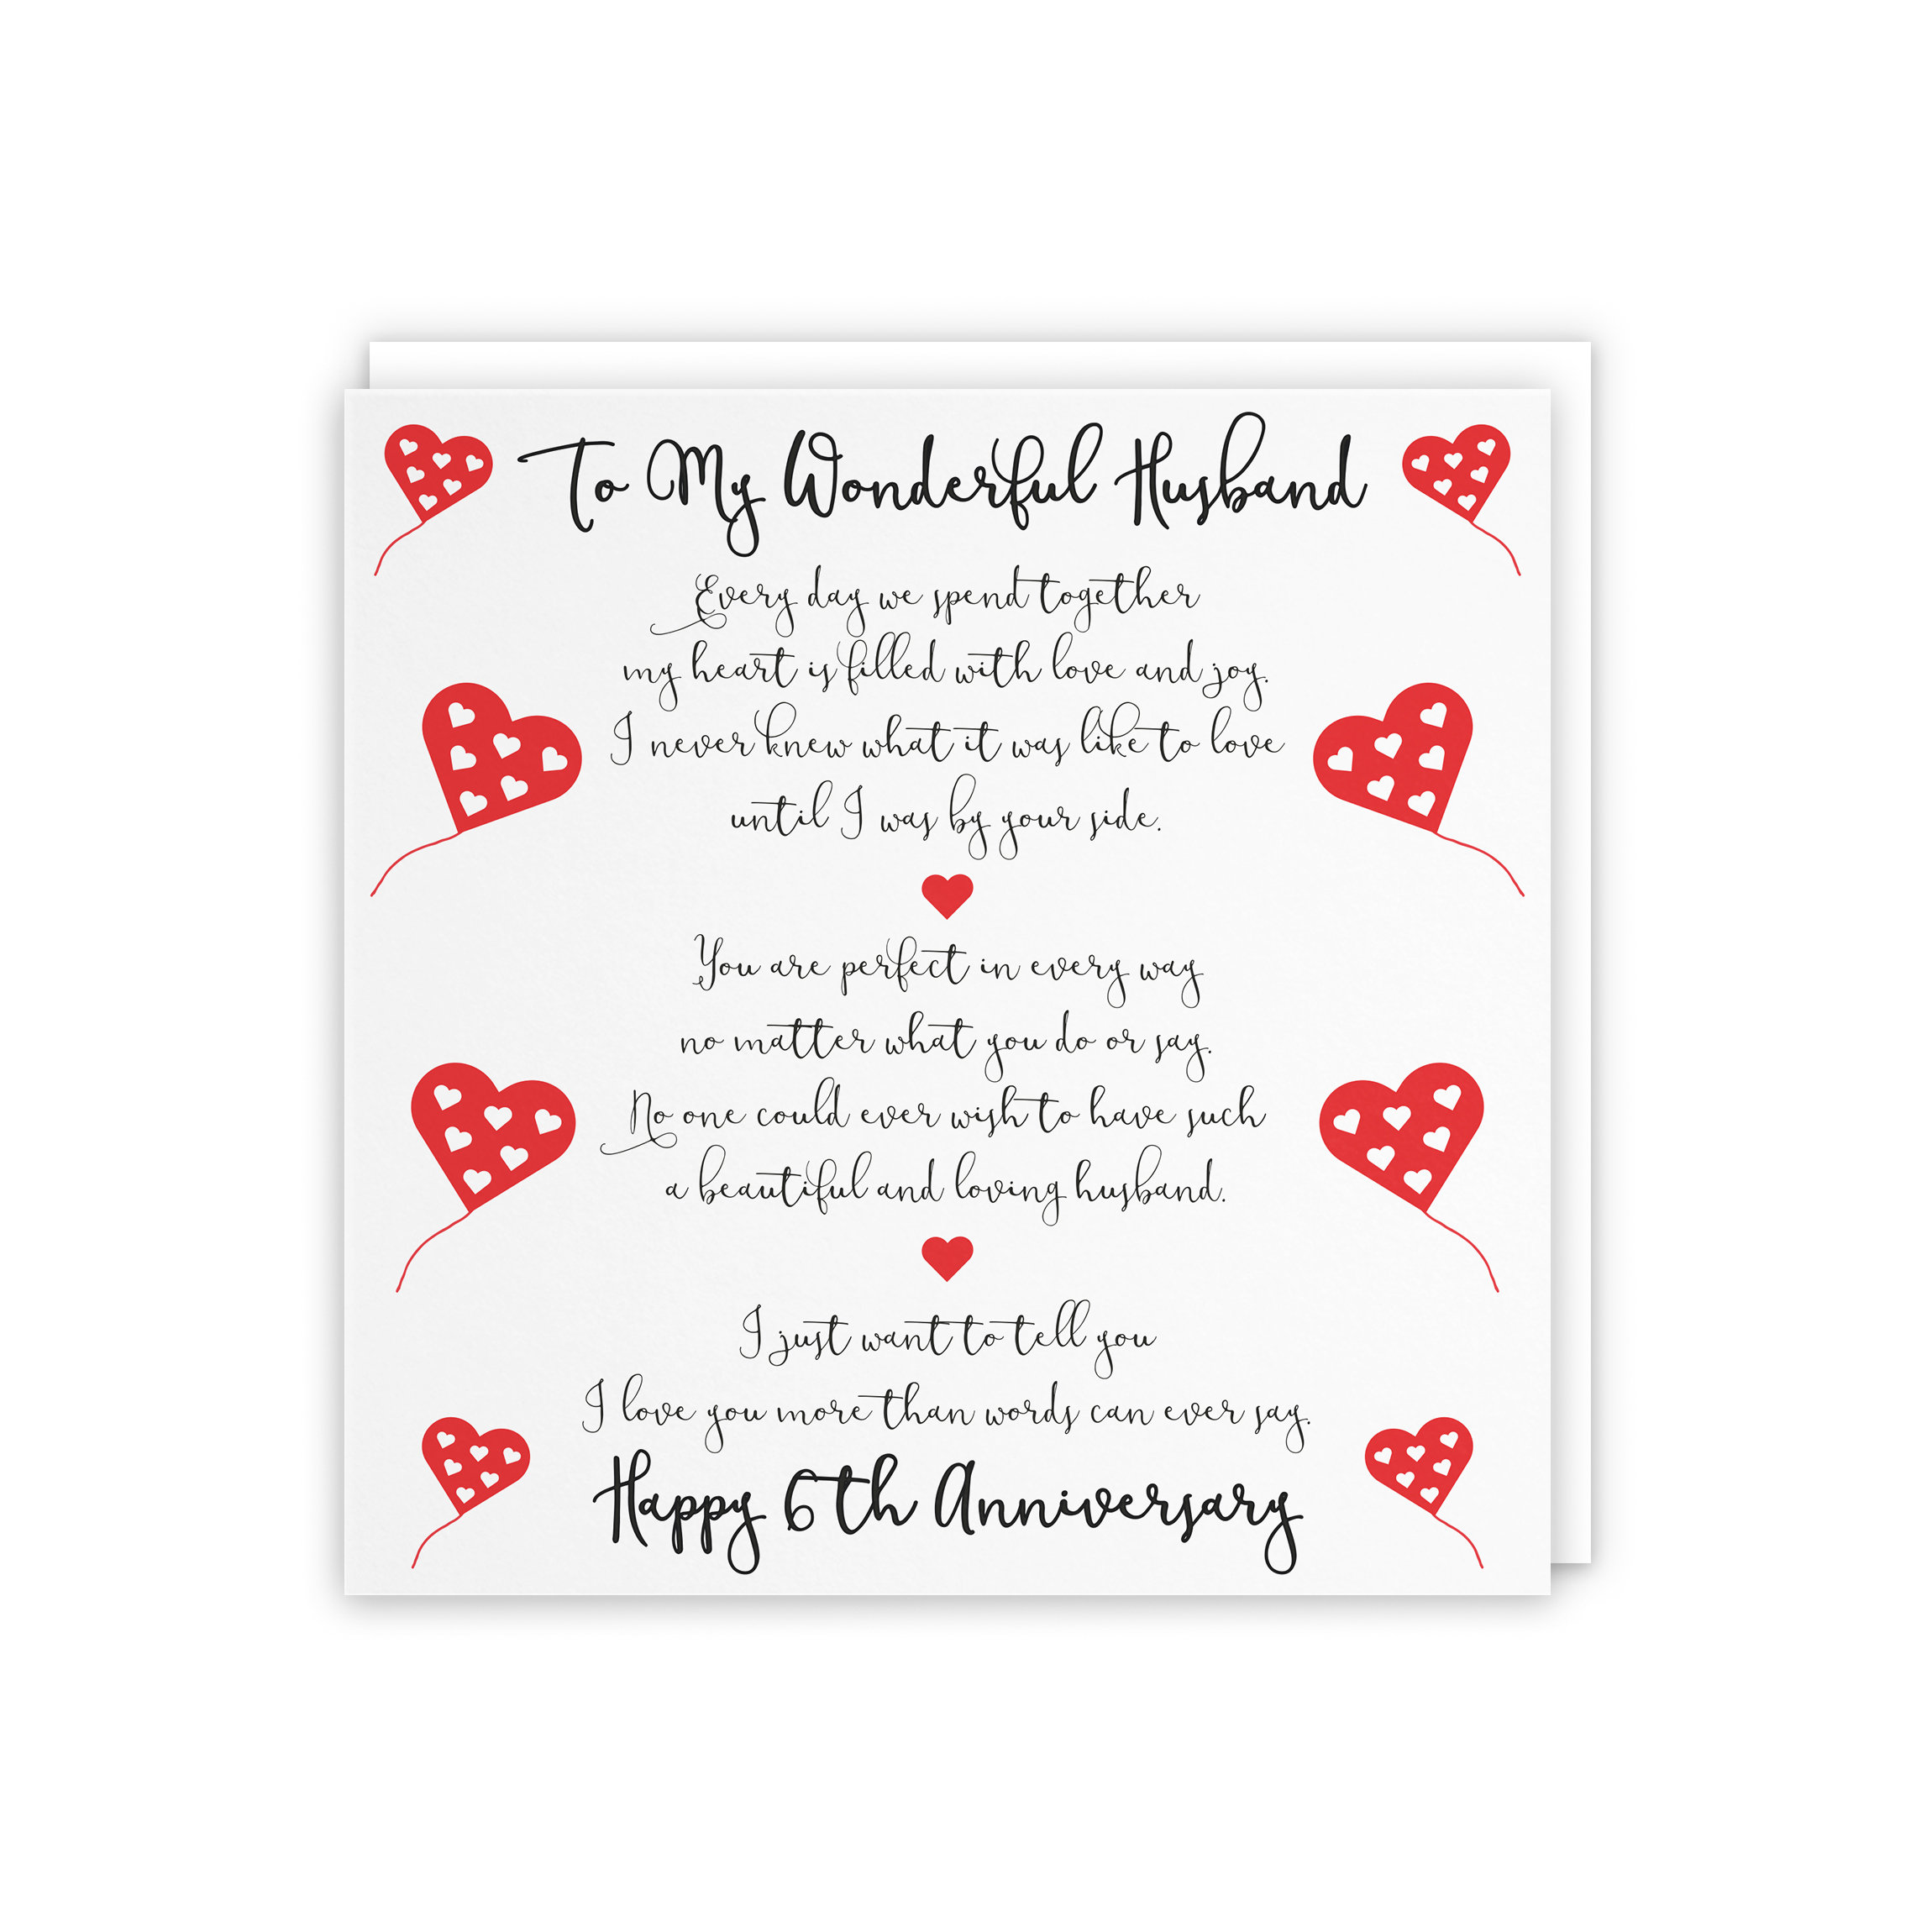 Romantic Husband 6th Wedding Anniversary Love Verse Card - To My Wonderful  Husband - Happy 6th Anniversary - Romantic Verses Collection